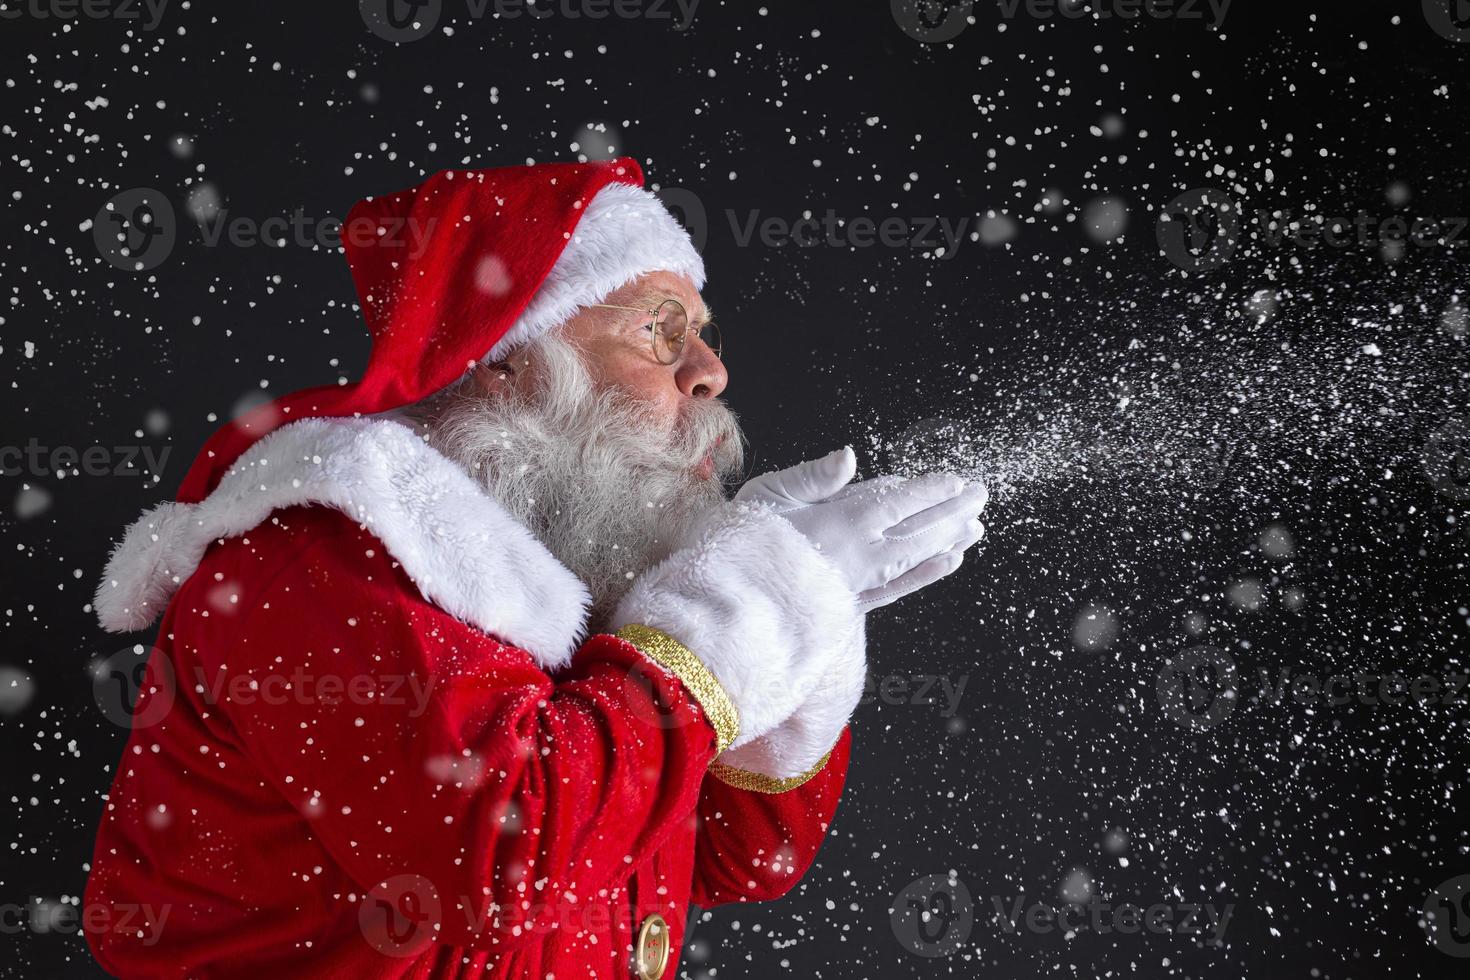 Christmastime traditions. Santa blowing snowflakes. photo